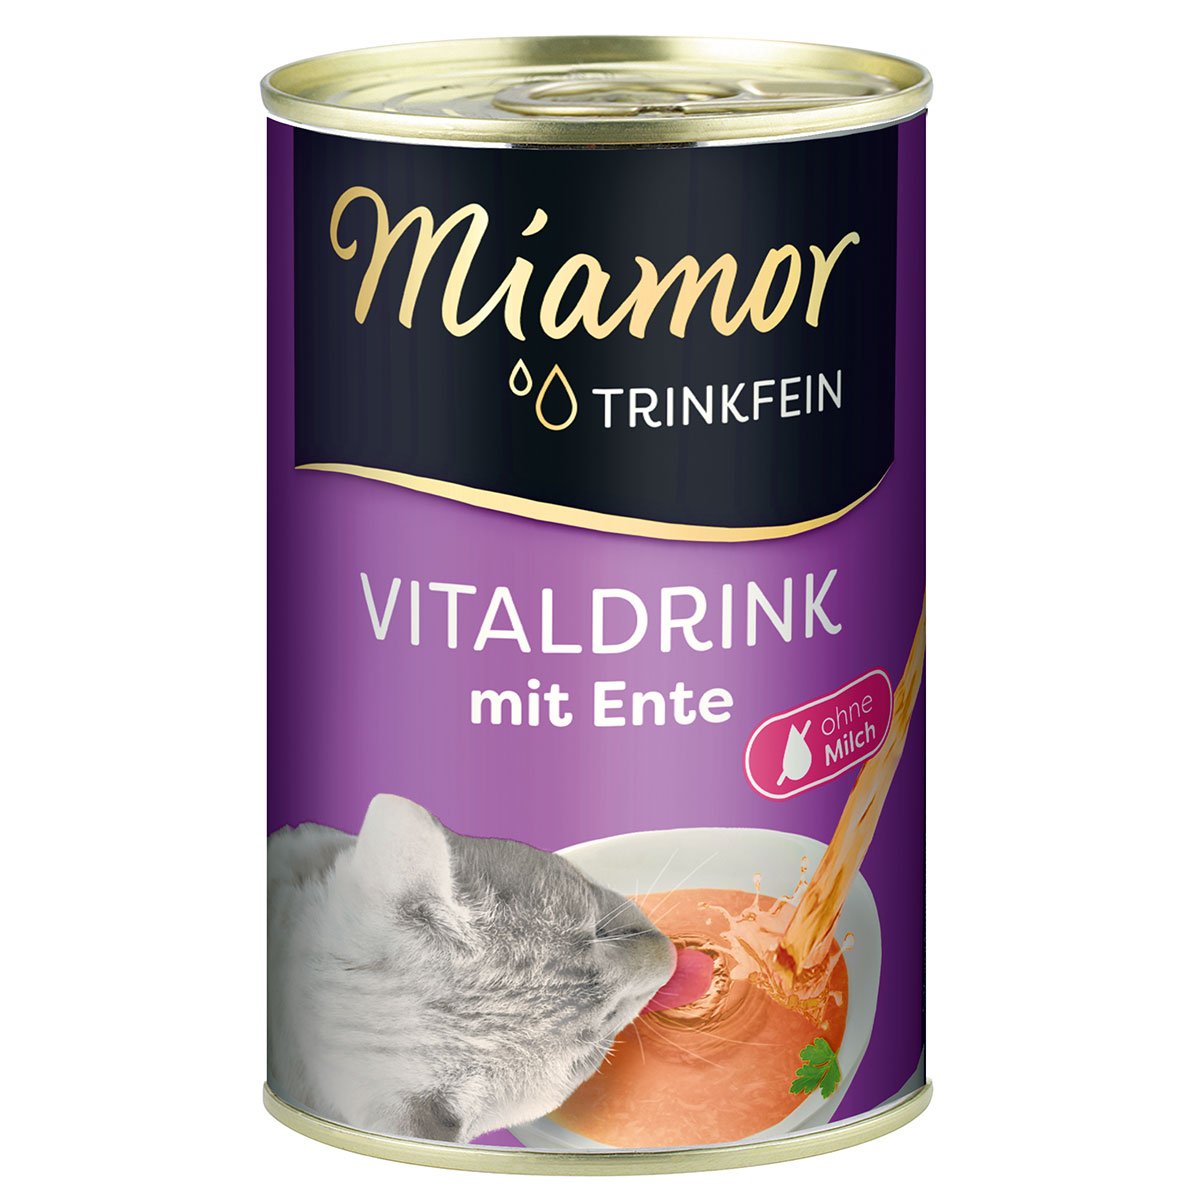 Miamor Trinkfein - Vitaldrink mit Ente 24x135ml